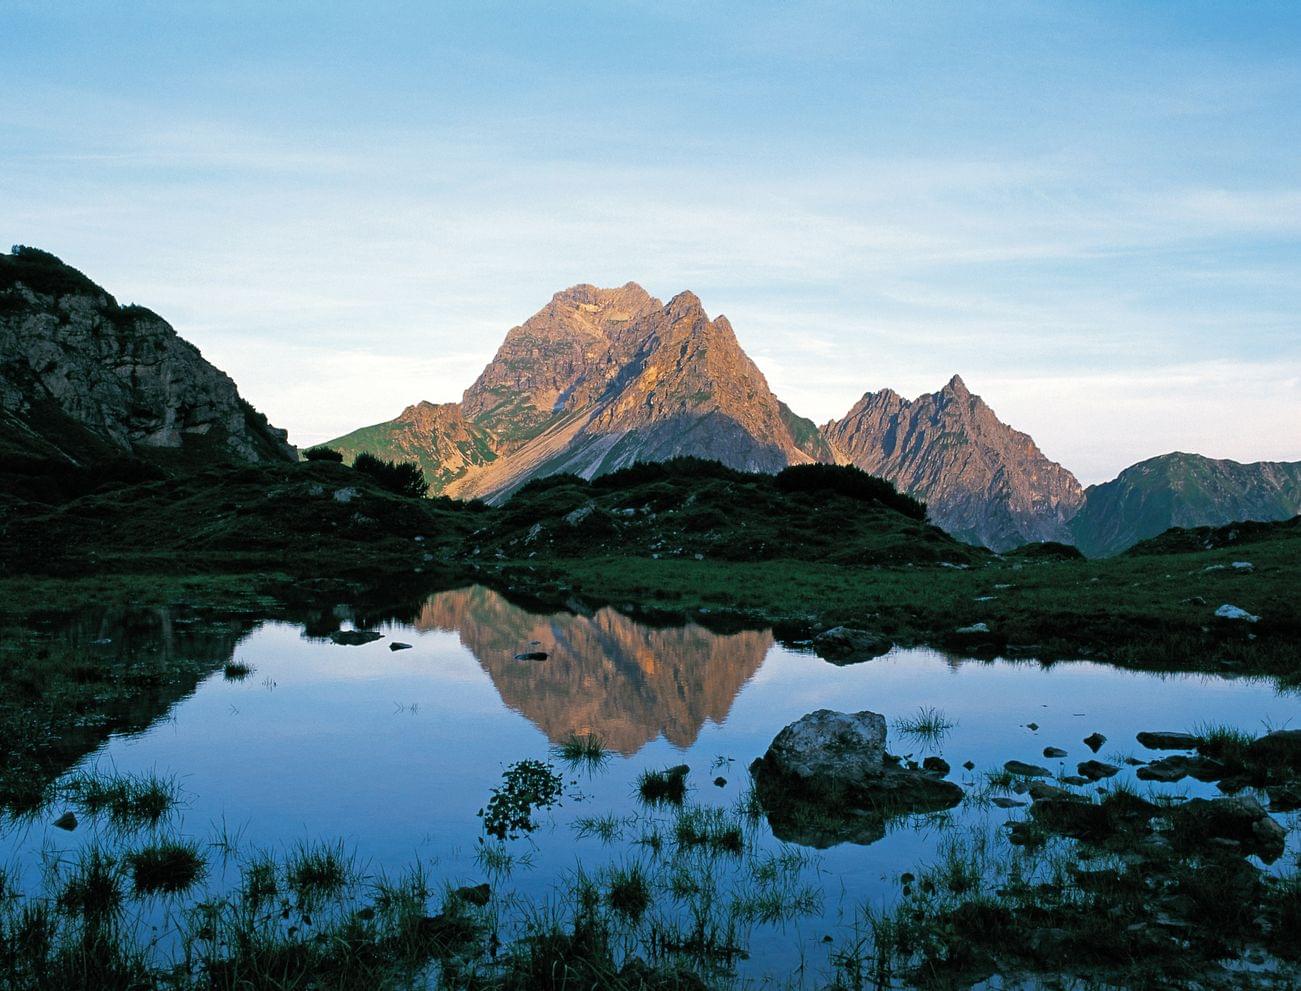 Mountain landscape in the Kleinwalsertal valley